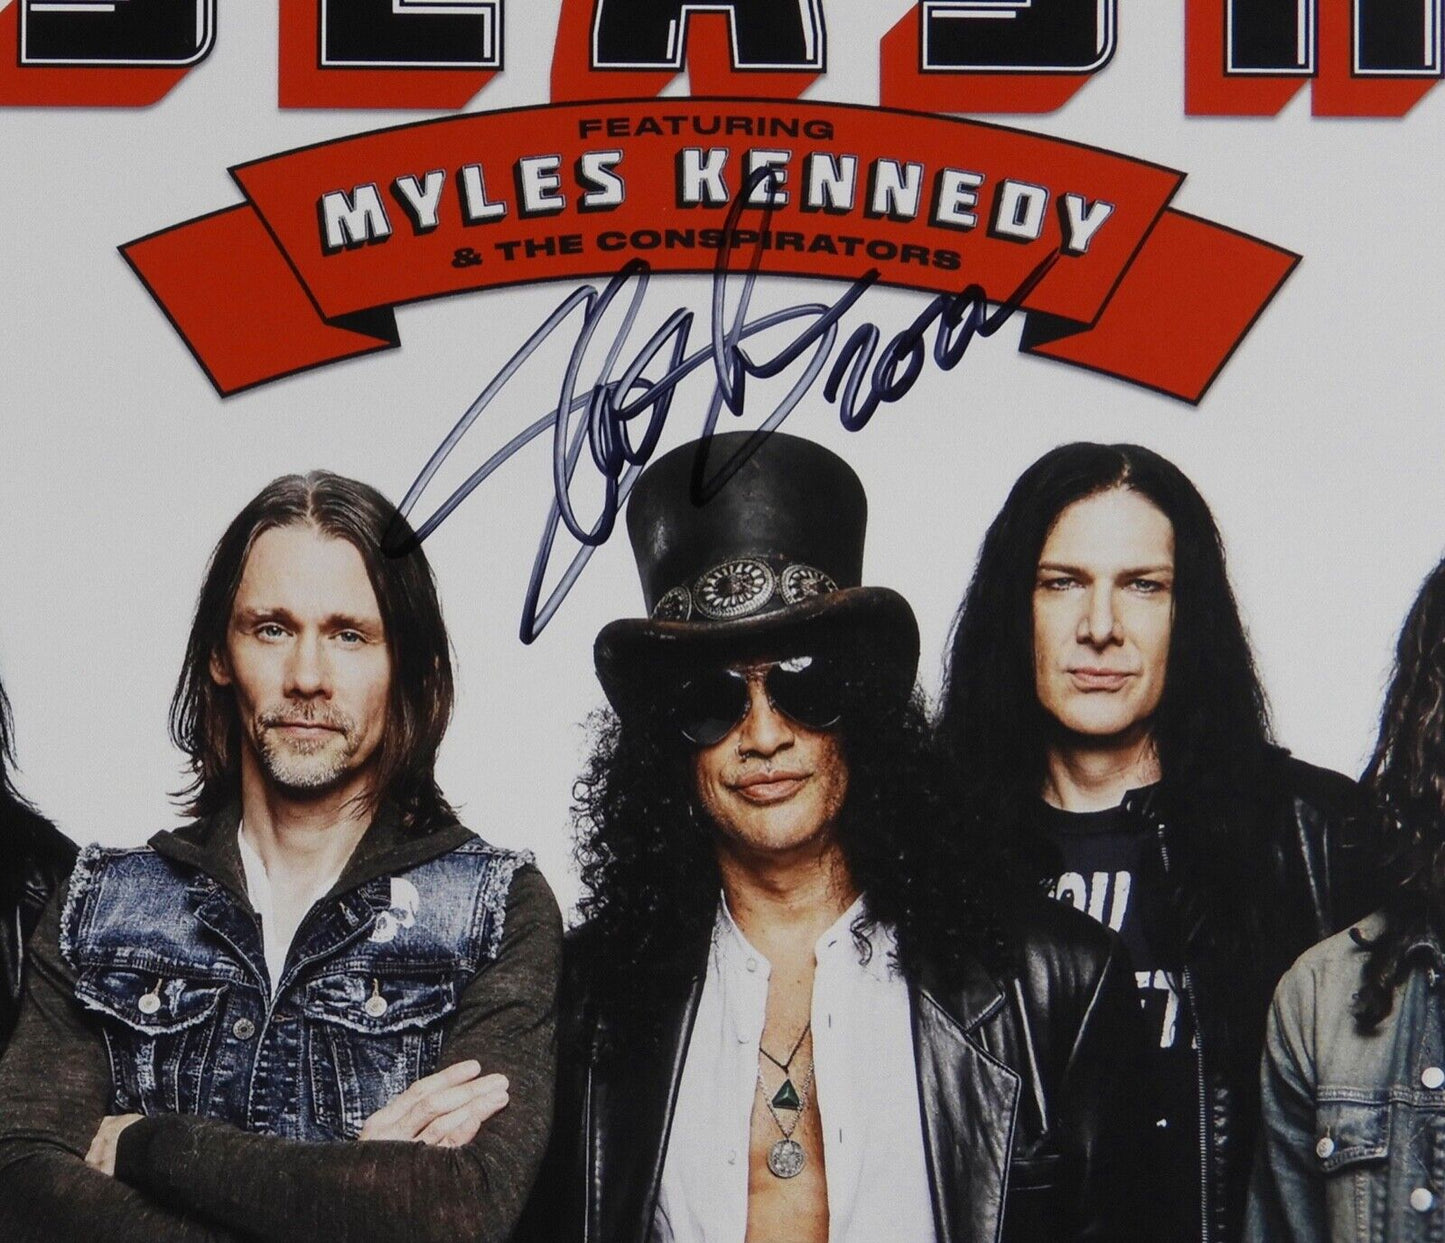 Slash JSA Signed Autograph Album Record Lithograph Guns N' Roses